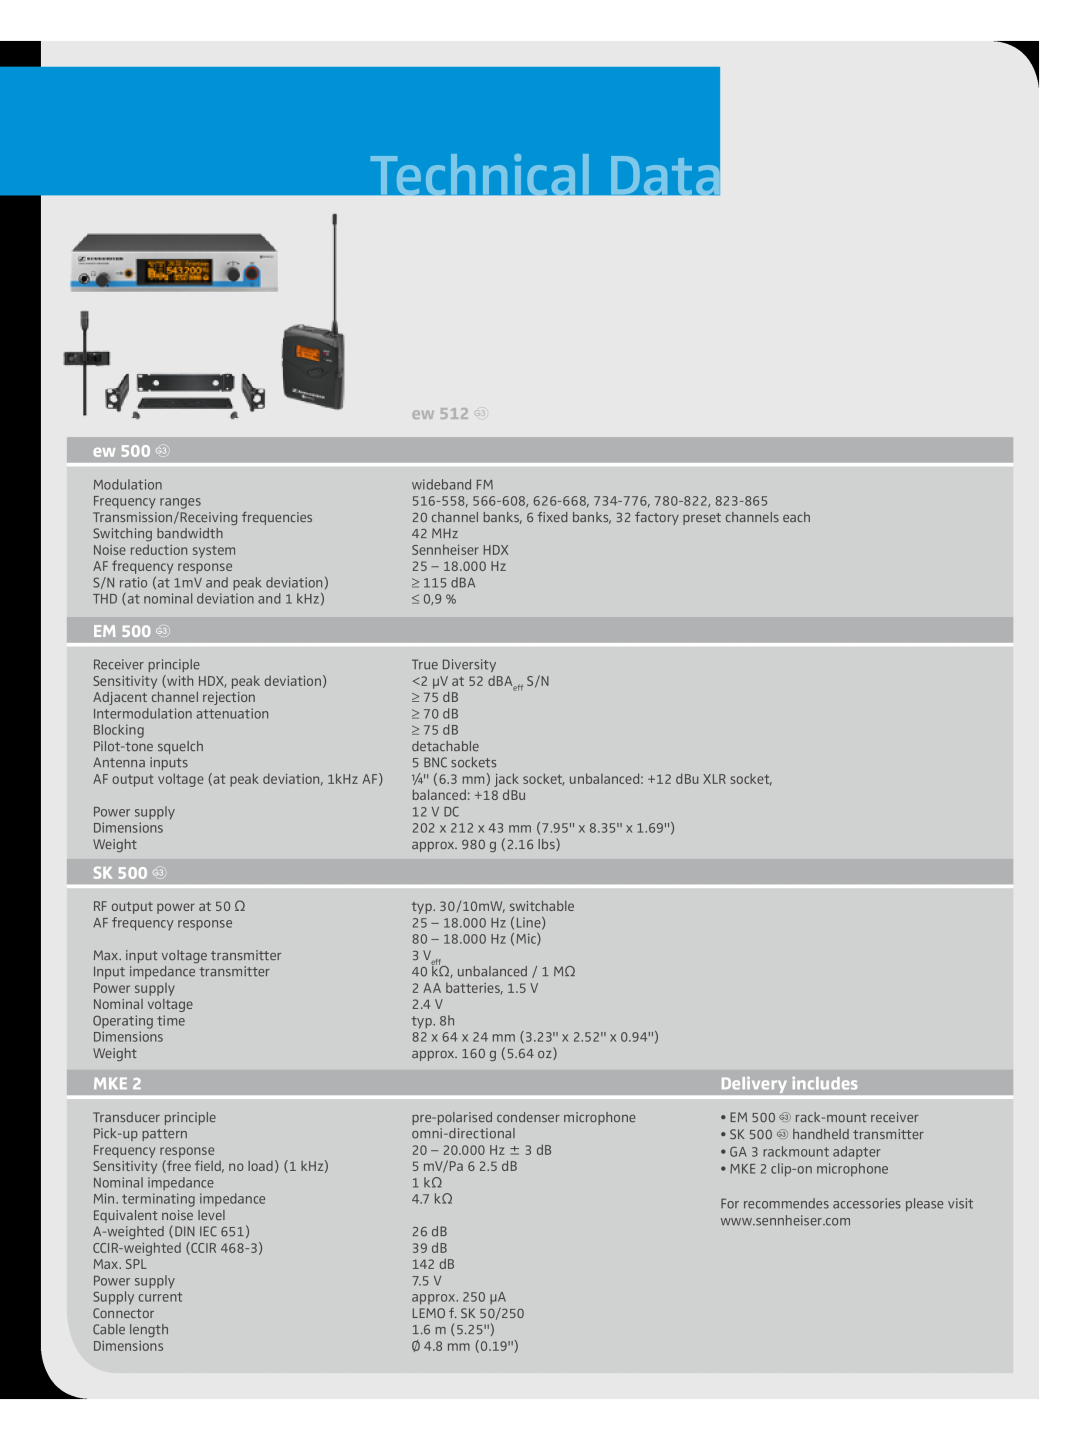 Sennheiser Laptop manual Technical Data, ew 512 g, ew 500 g, EM 500 g, SK 500 g, Delivery includes 